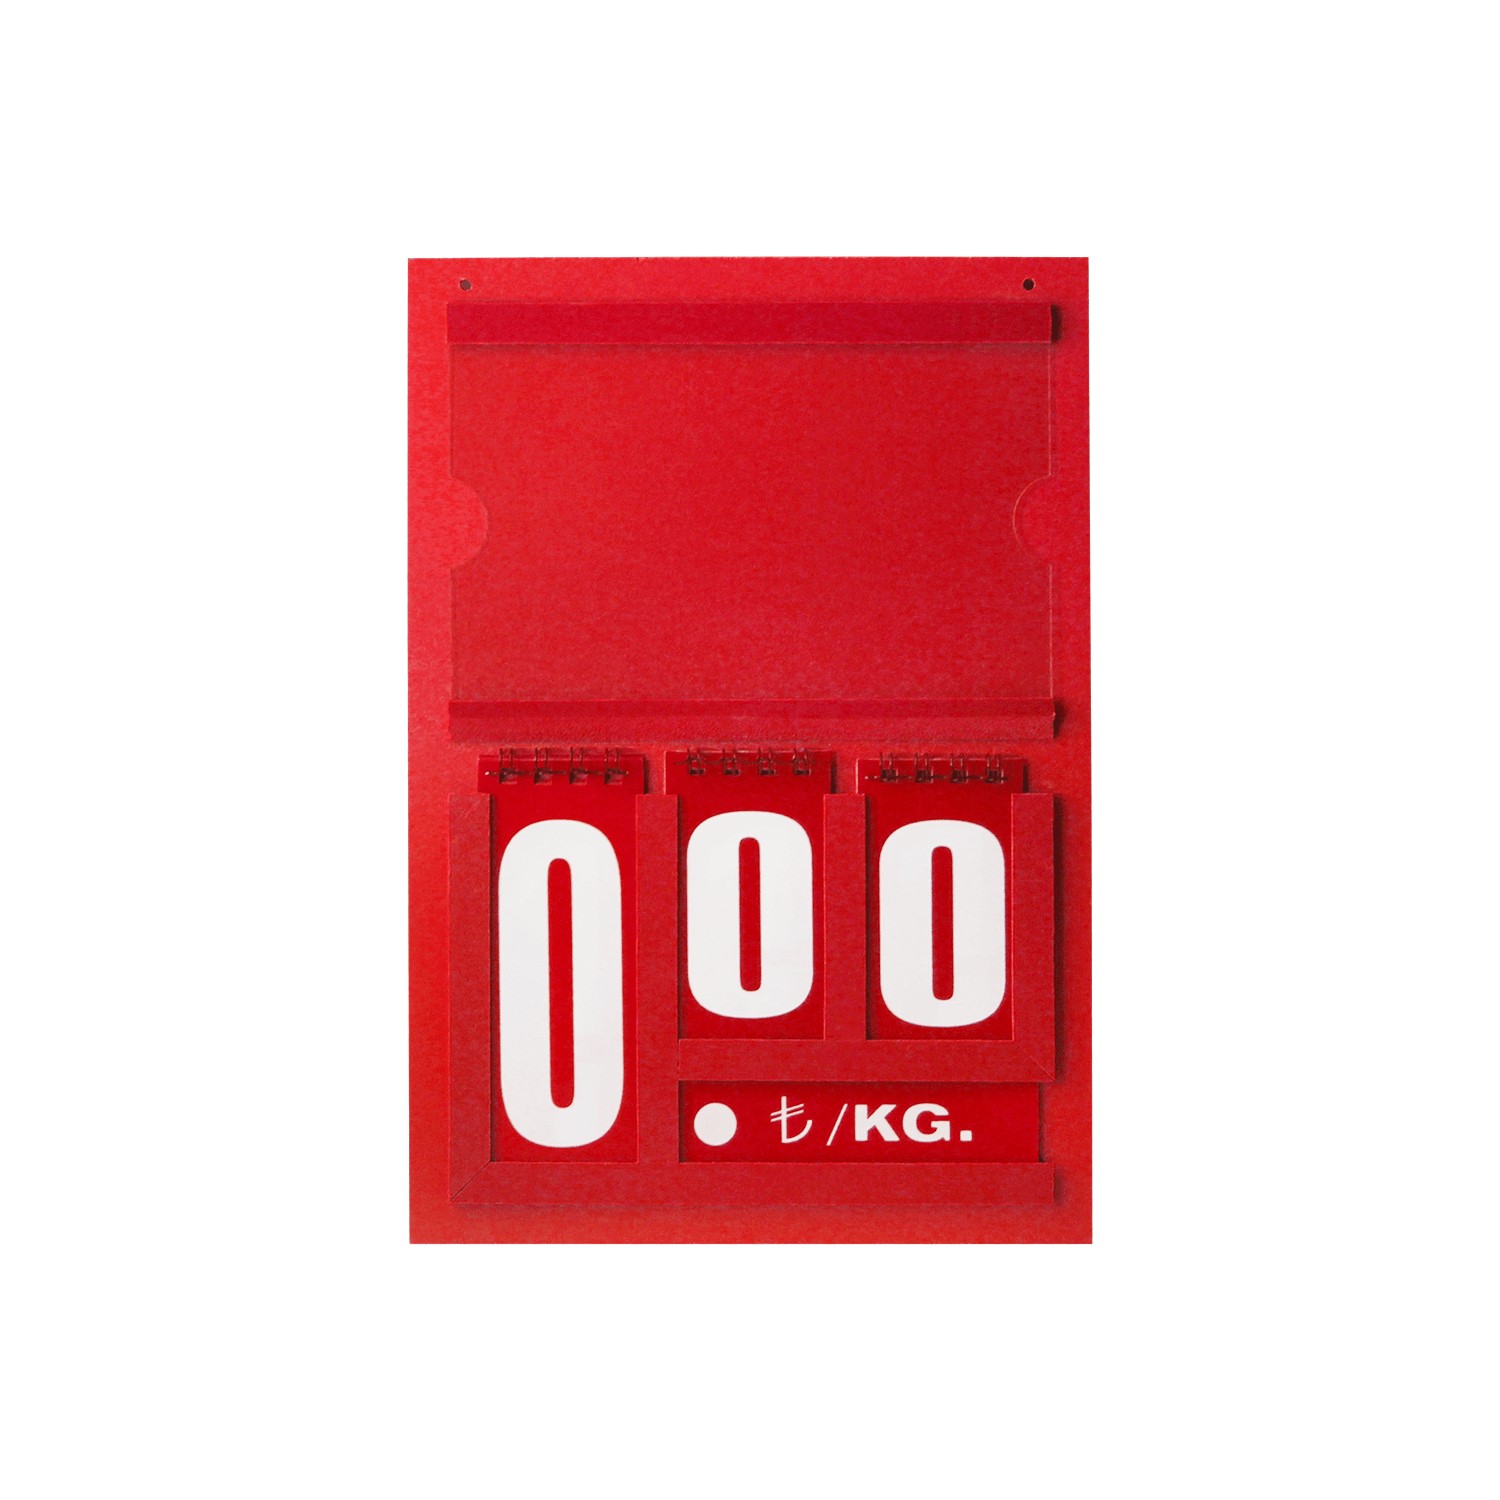 Resimli Manav Etiketi Mini Tek Taraflı 16x24 cm Kırmızı -1.jpg (175 KB)